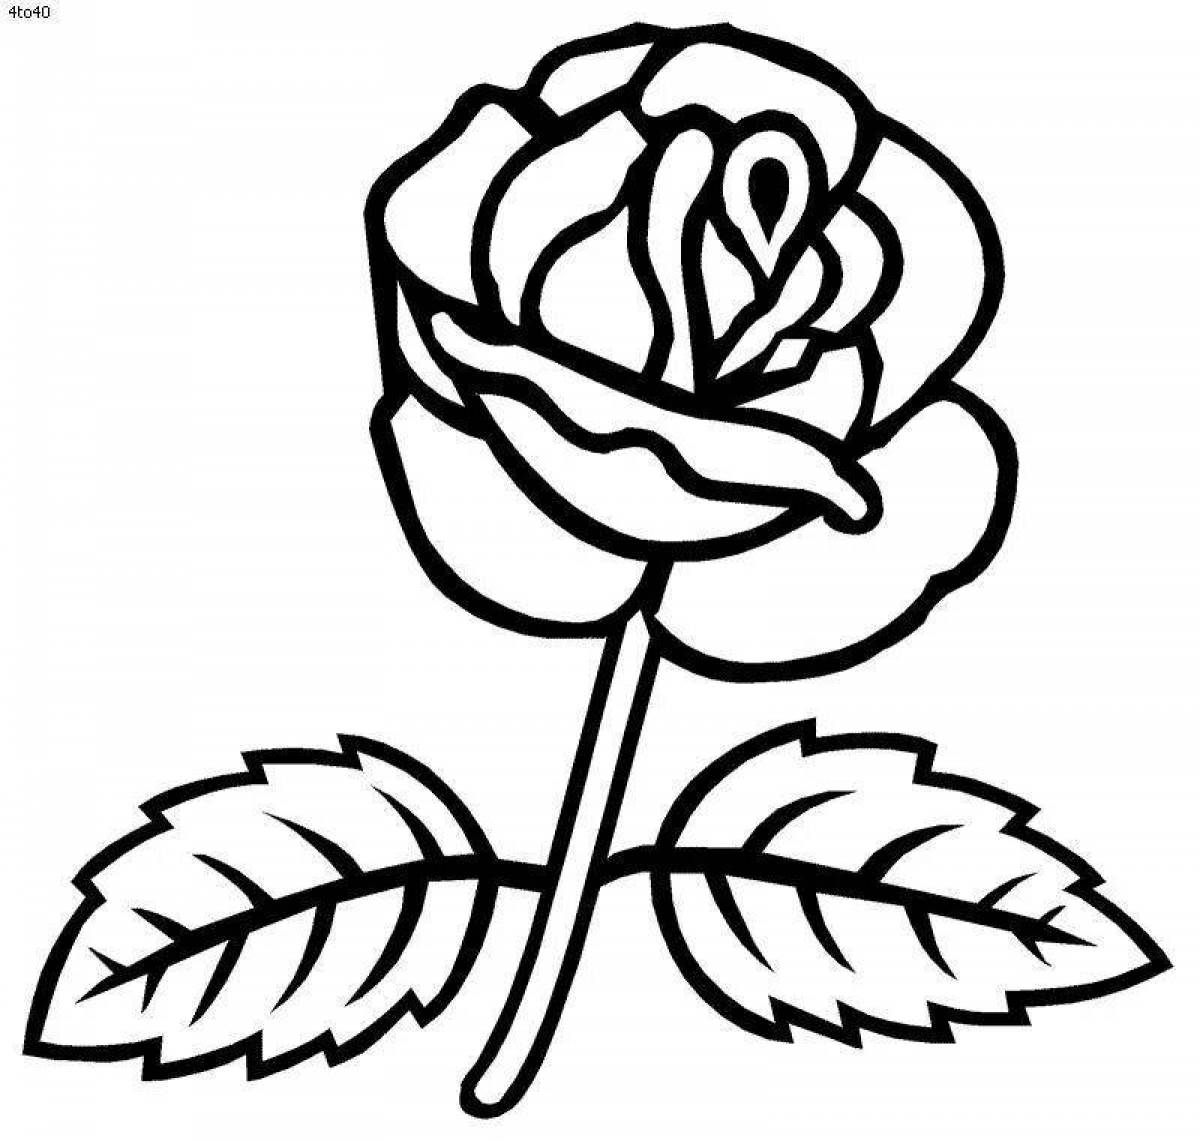 Unique coloring picture of a rose